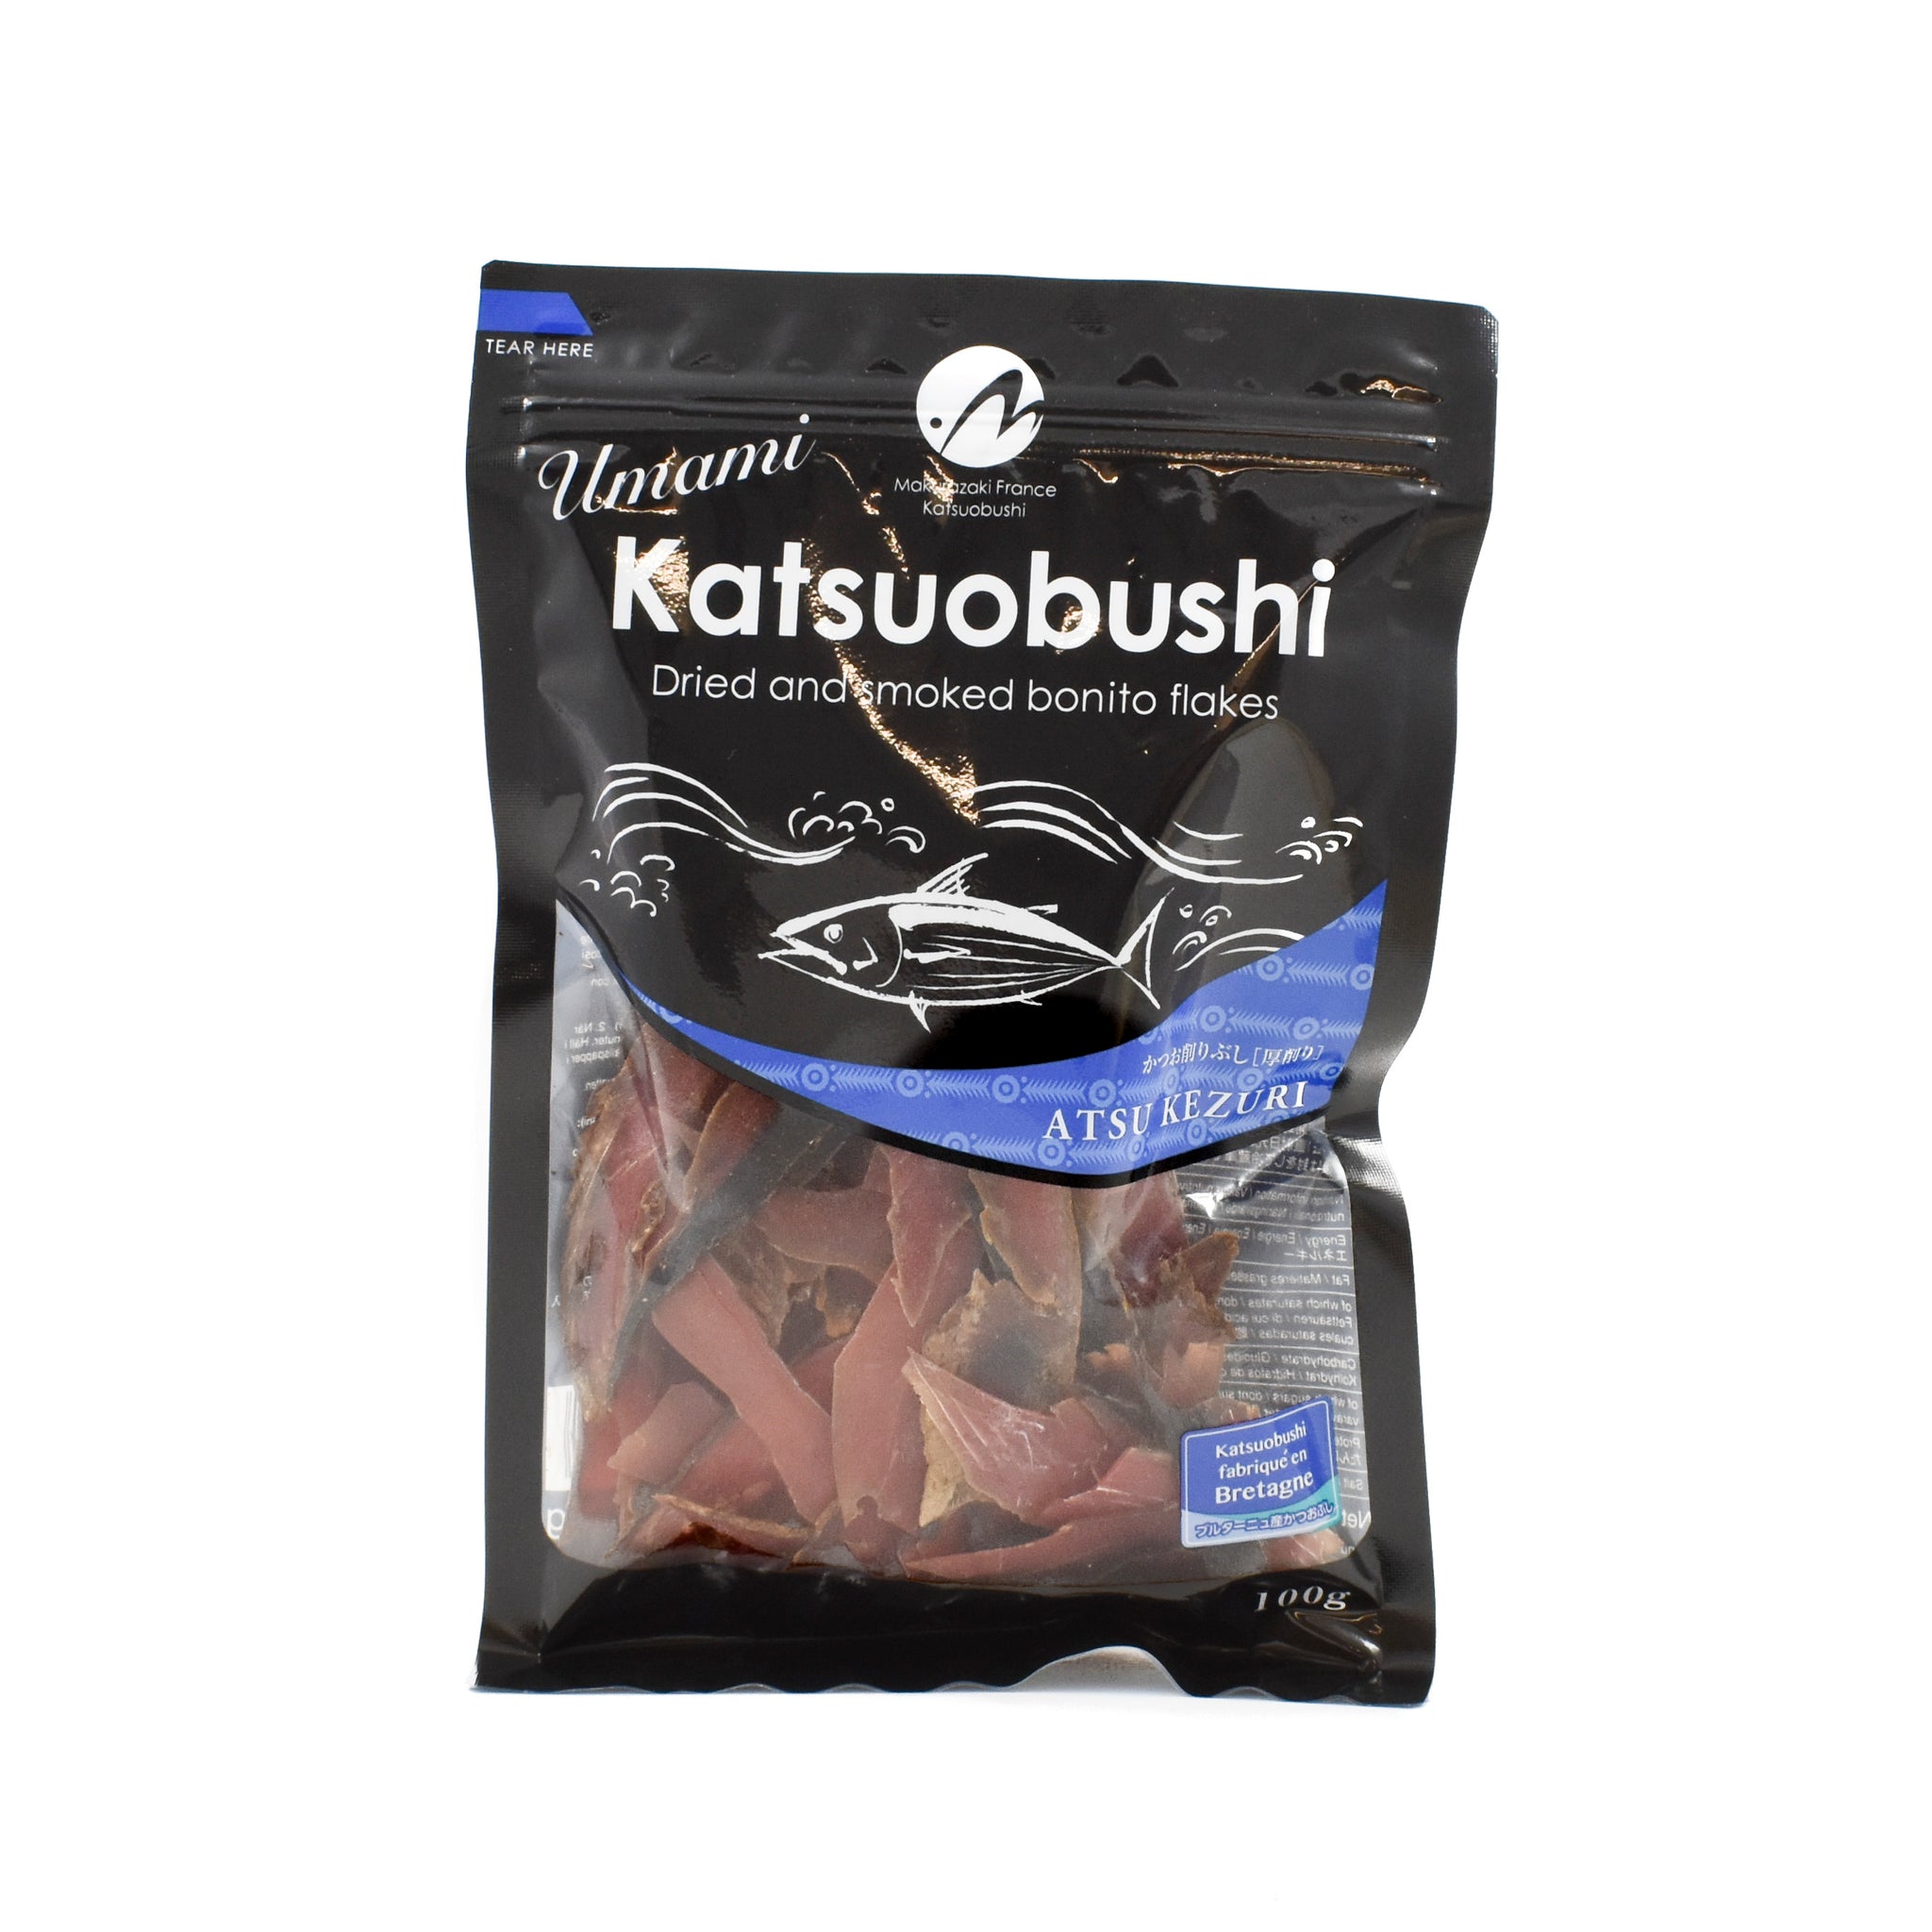 Makurazaki France Katsuobushi Dried Bonito - Thick Sliced 100g Ingredients Seaweed Squid Ink Fish Japanese Food